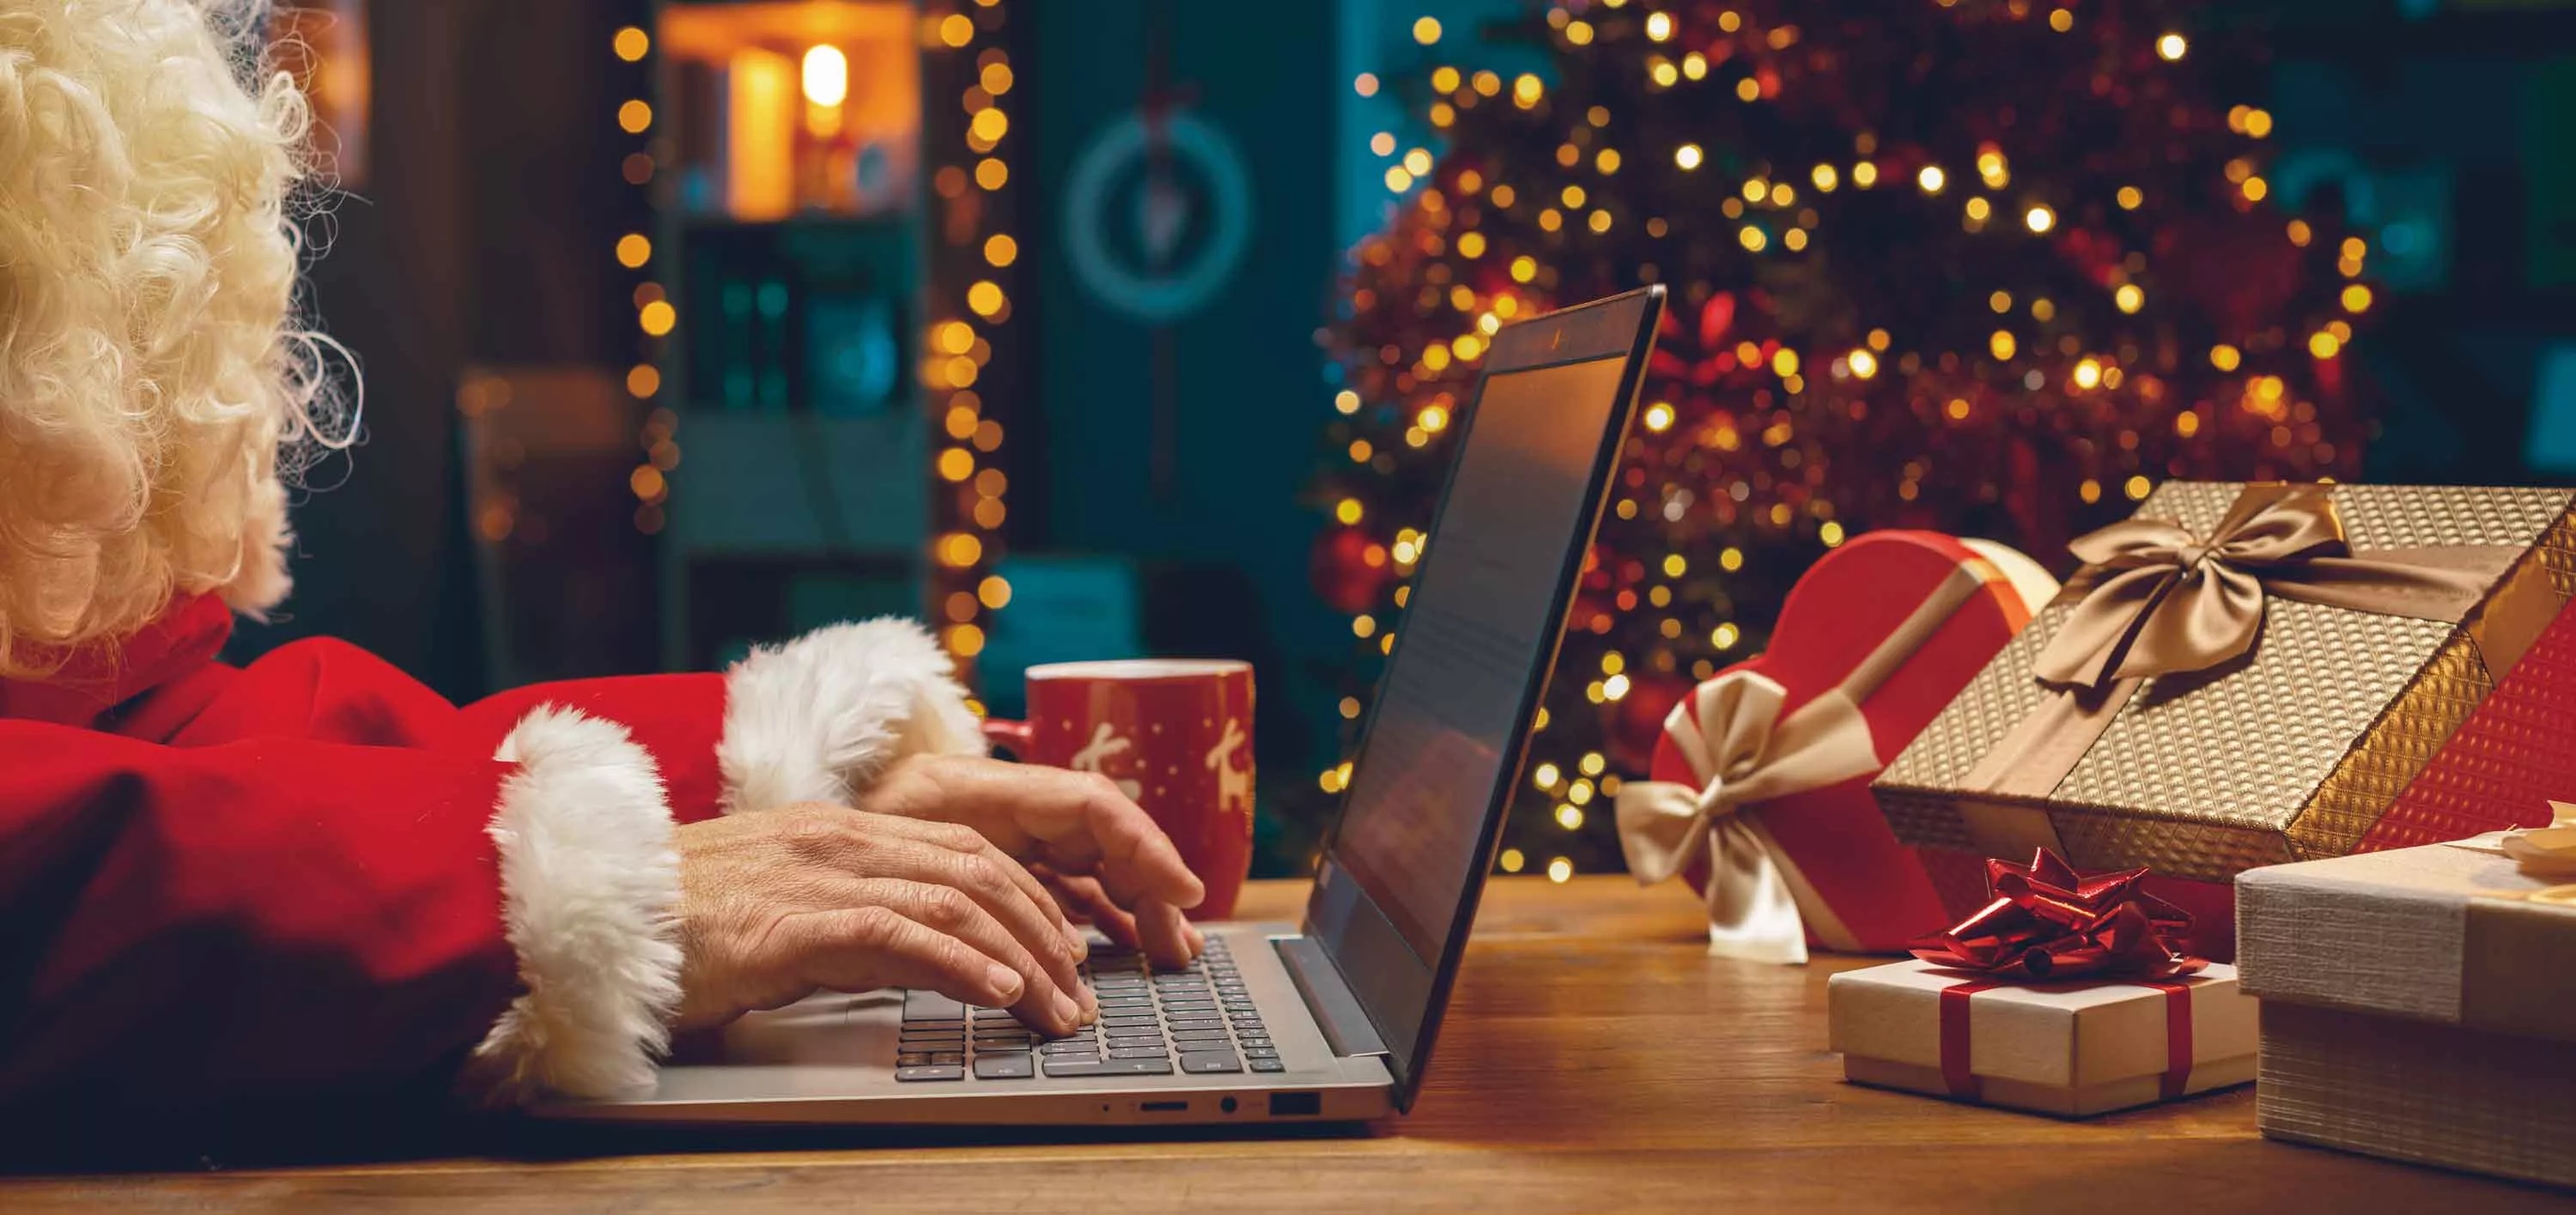 santa-claus-connecting-online-at-christmas